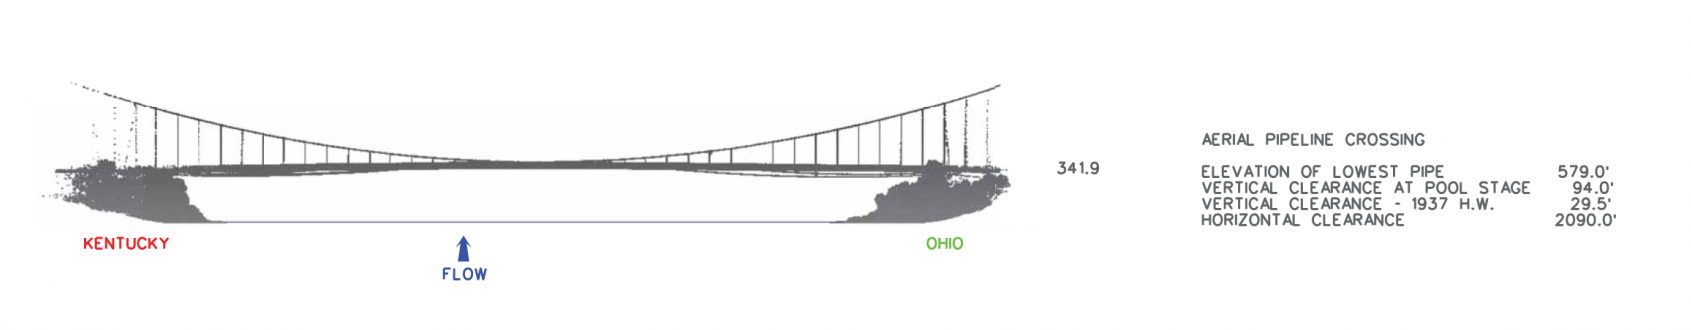 Aerial Pipeline Crossing Clearances | Bridge Calculator LLC